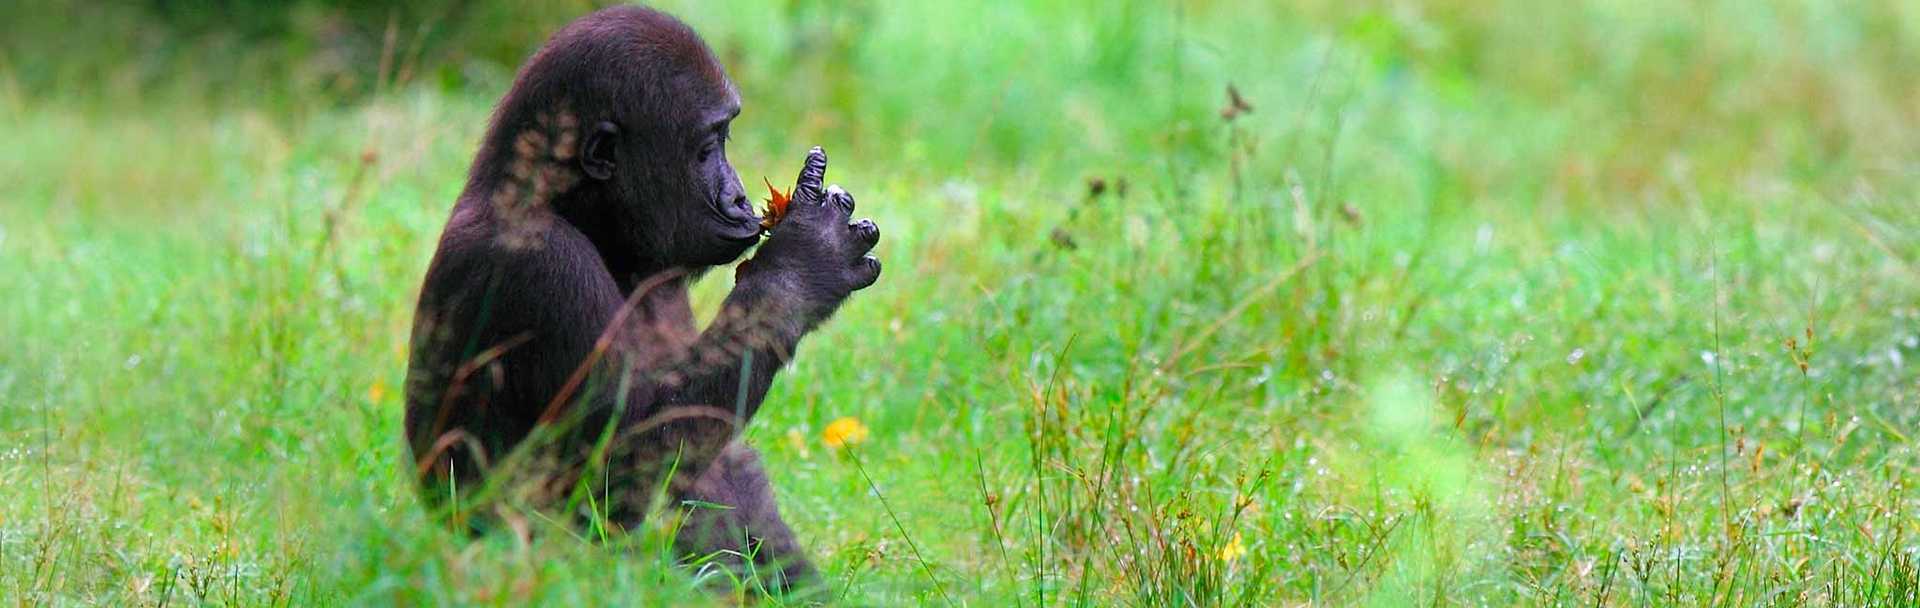 Rwanda Gorilla Trekking and Safari - Gorilla examines flower